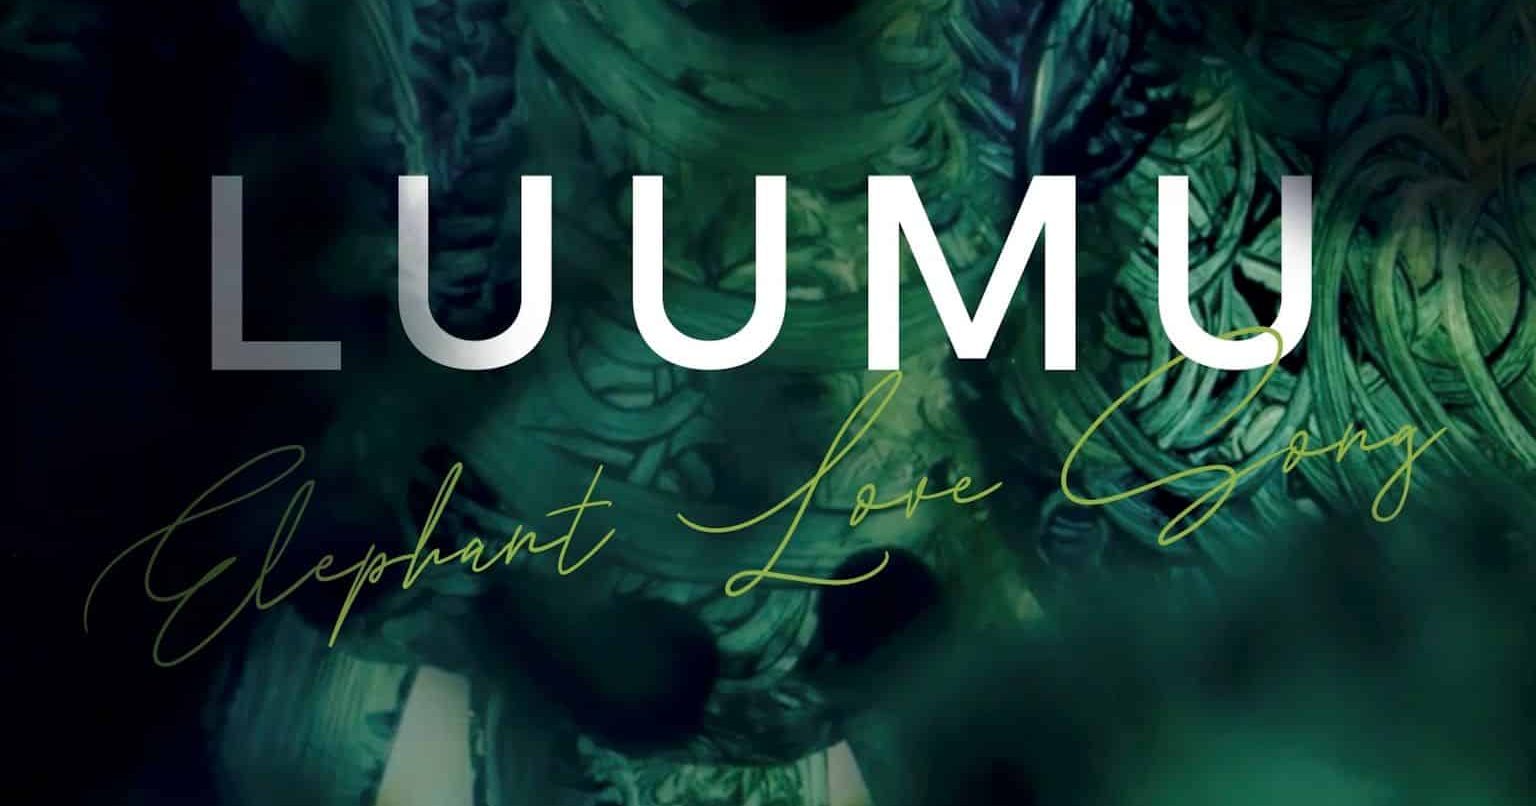 Luumu_Elephant love song